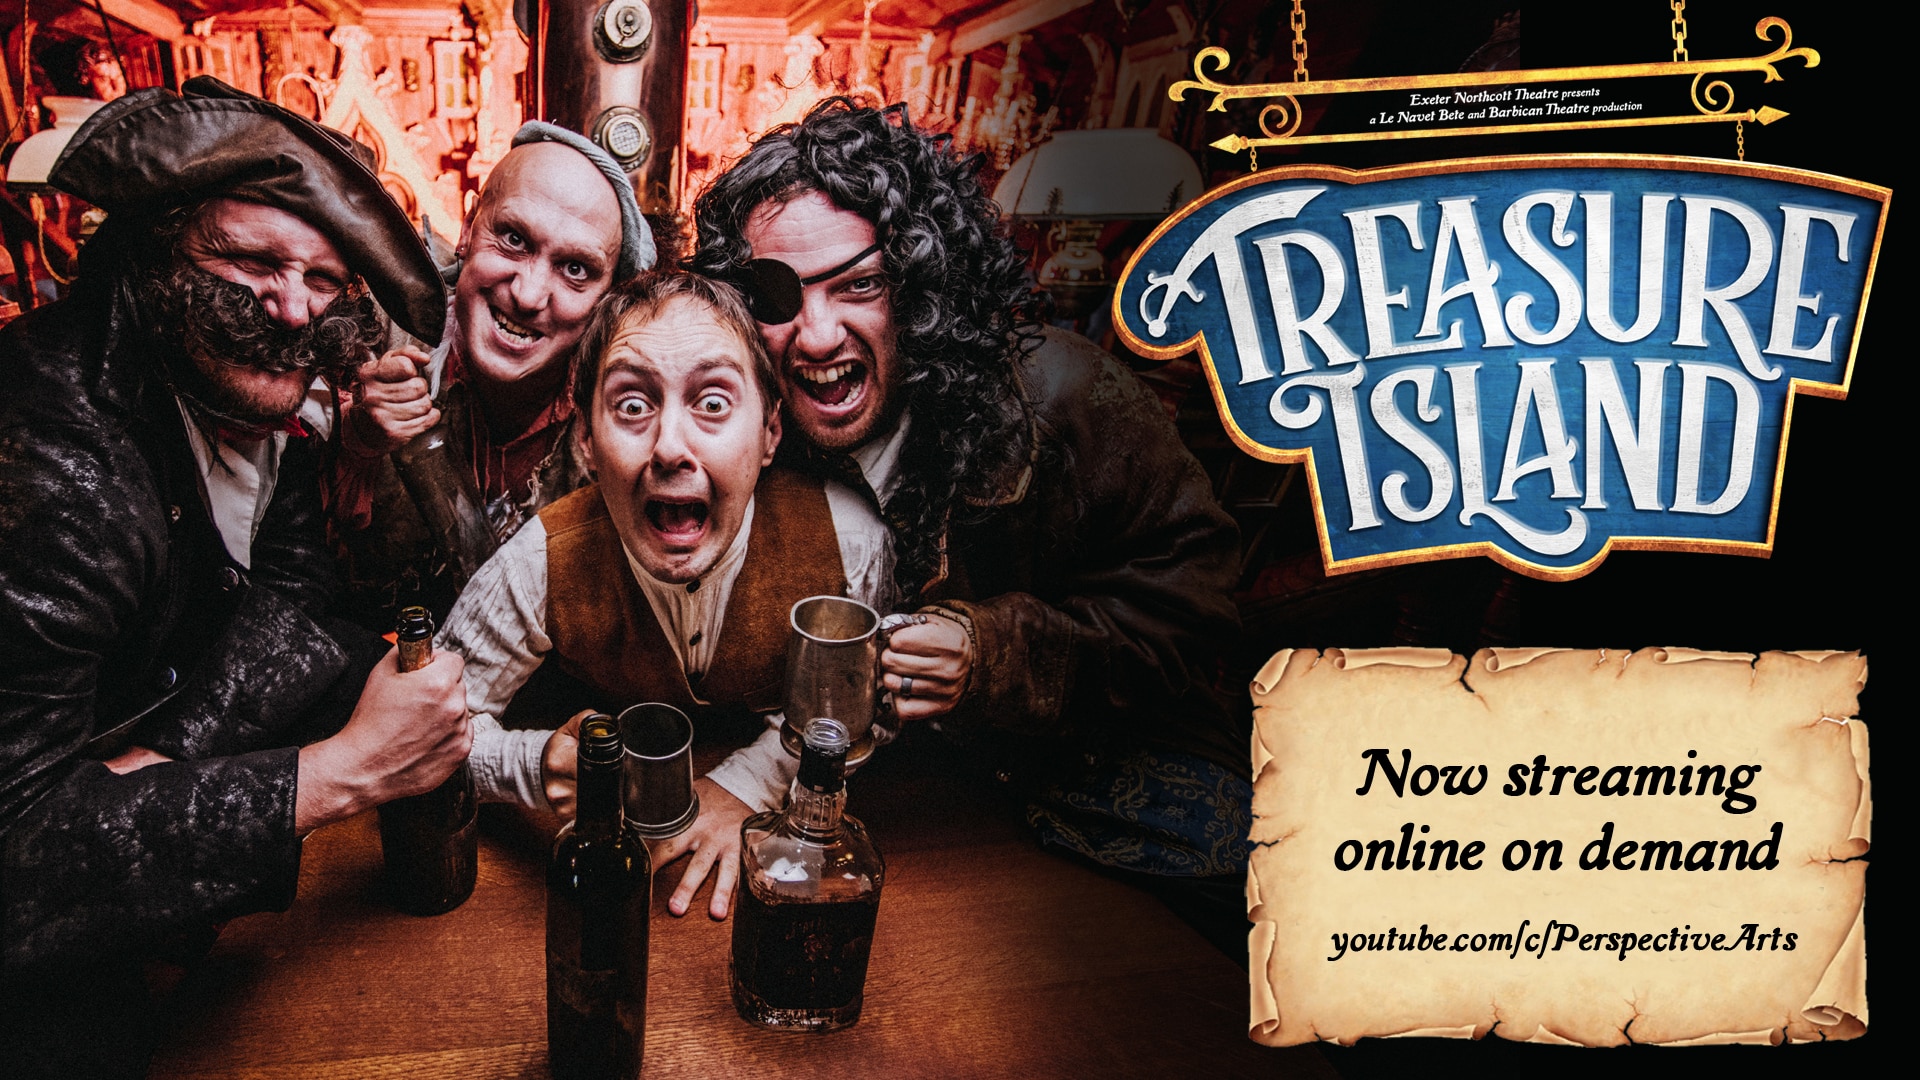 Treasure Island Live Stream until 30 January